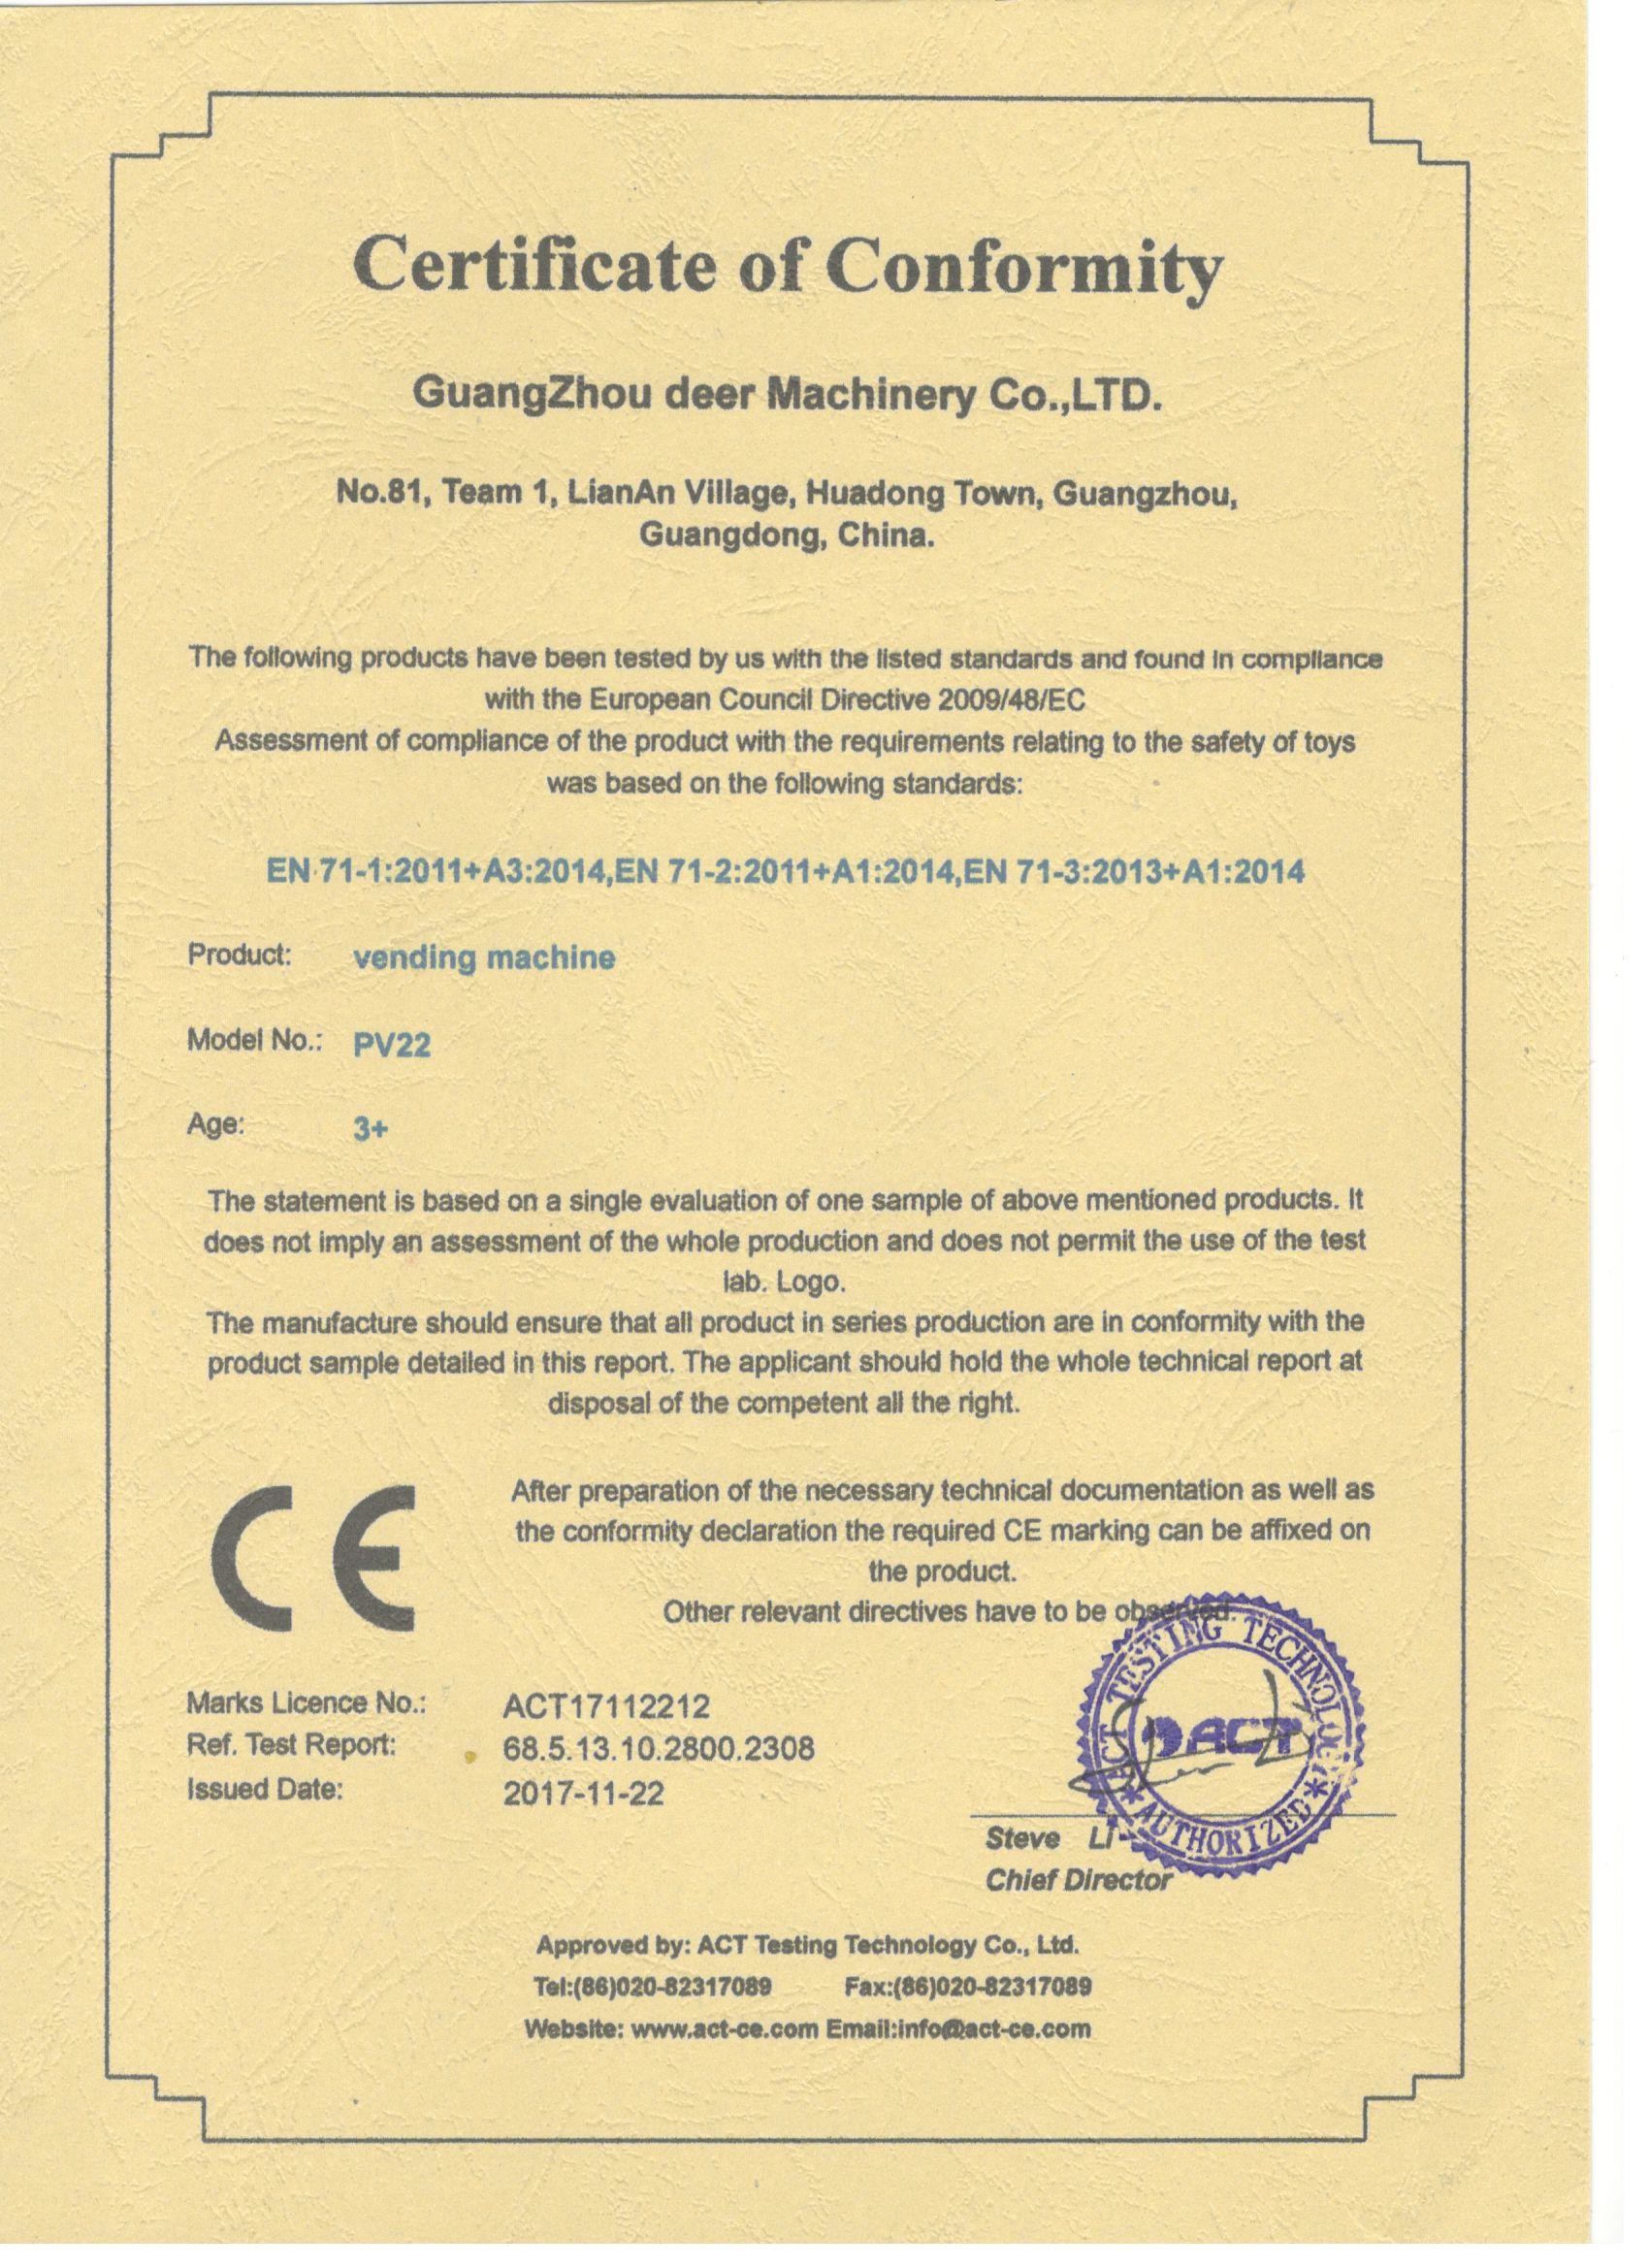 चीन Guangzhou Deer Machinery Co., Ltd. प्रमाणपत्र